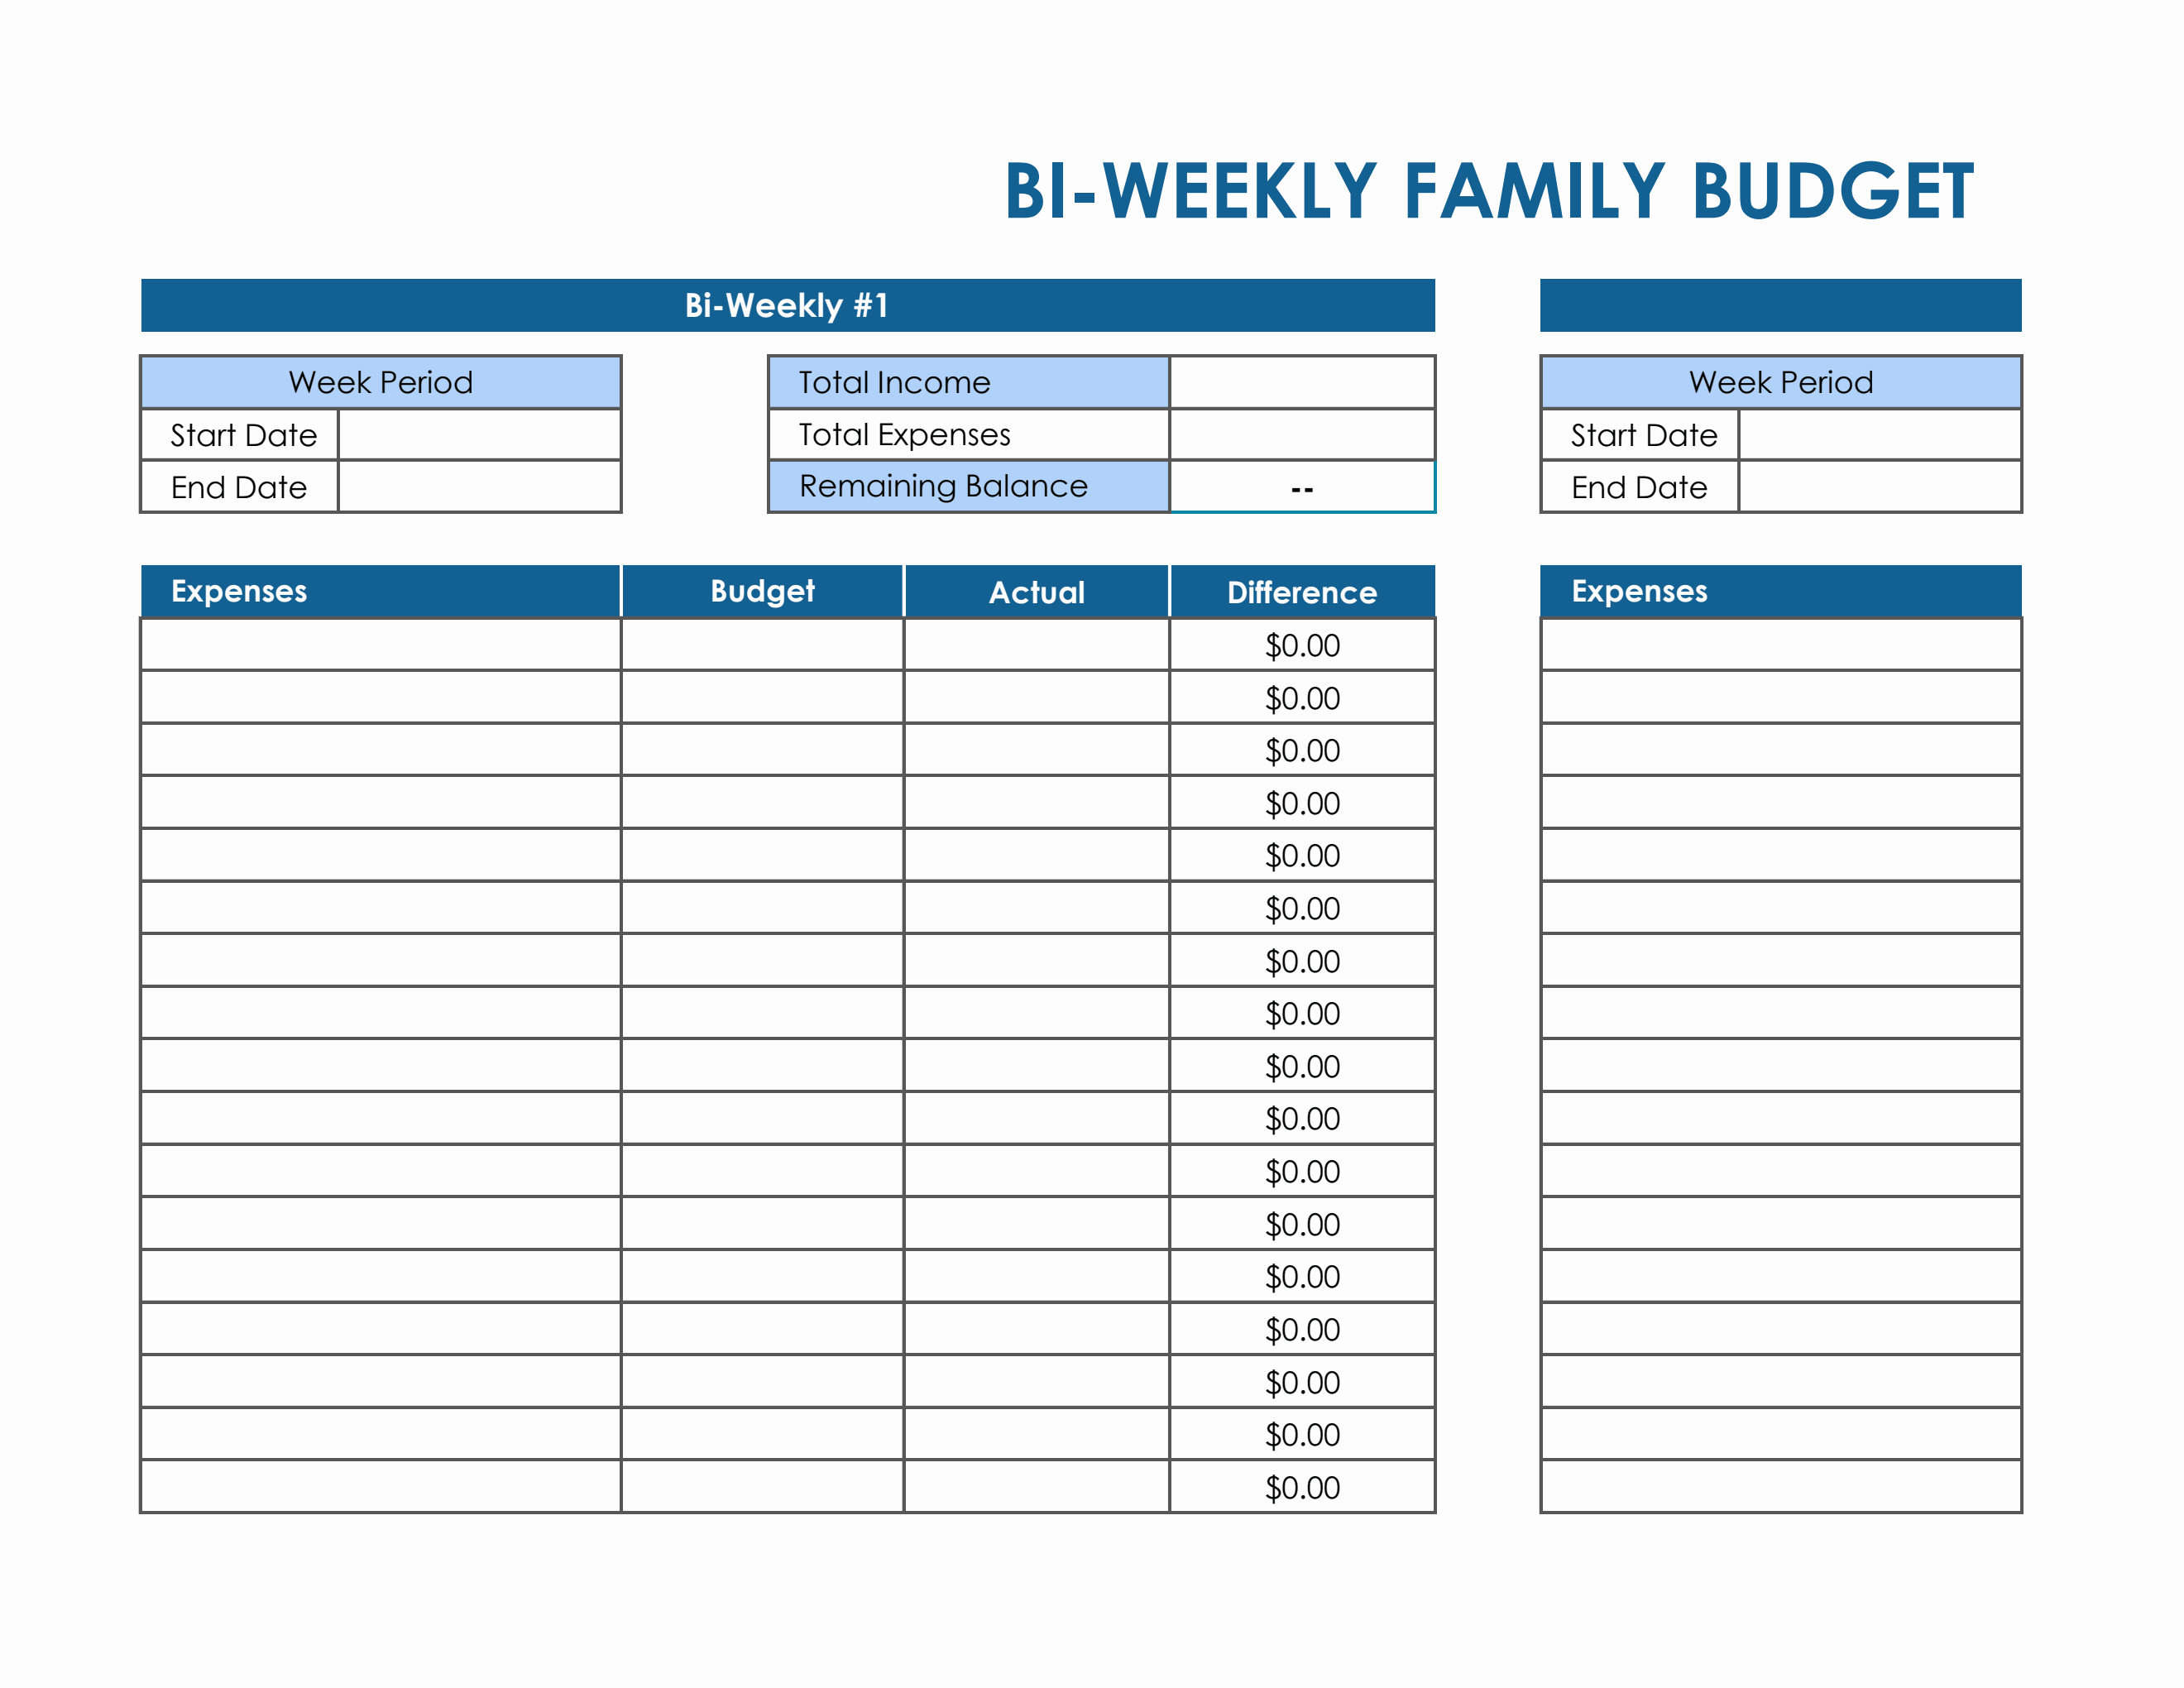 Bi Weekly Budget Templates Printable Templates